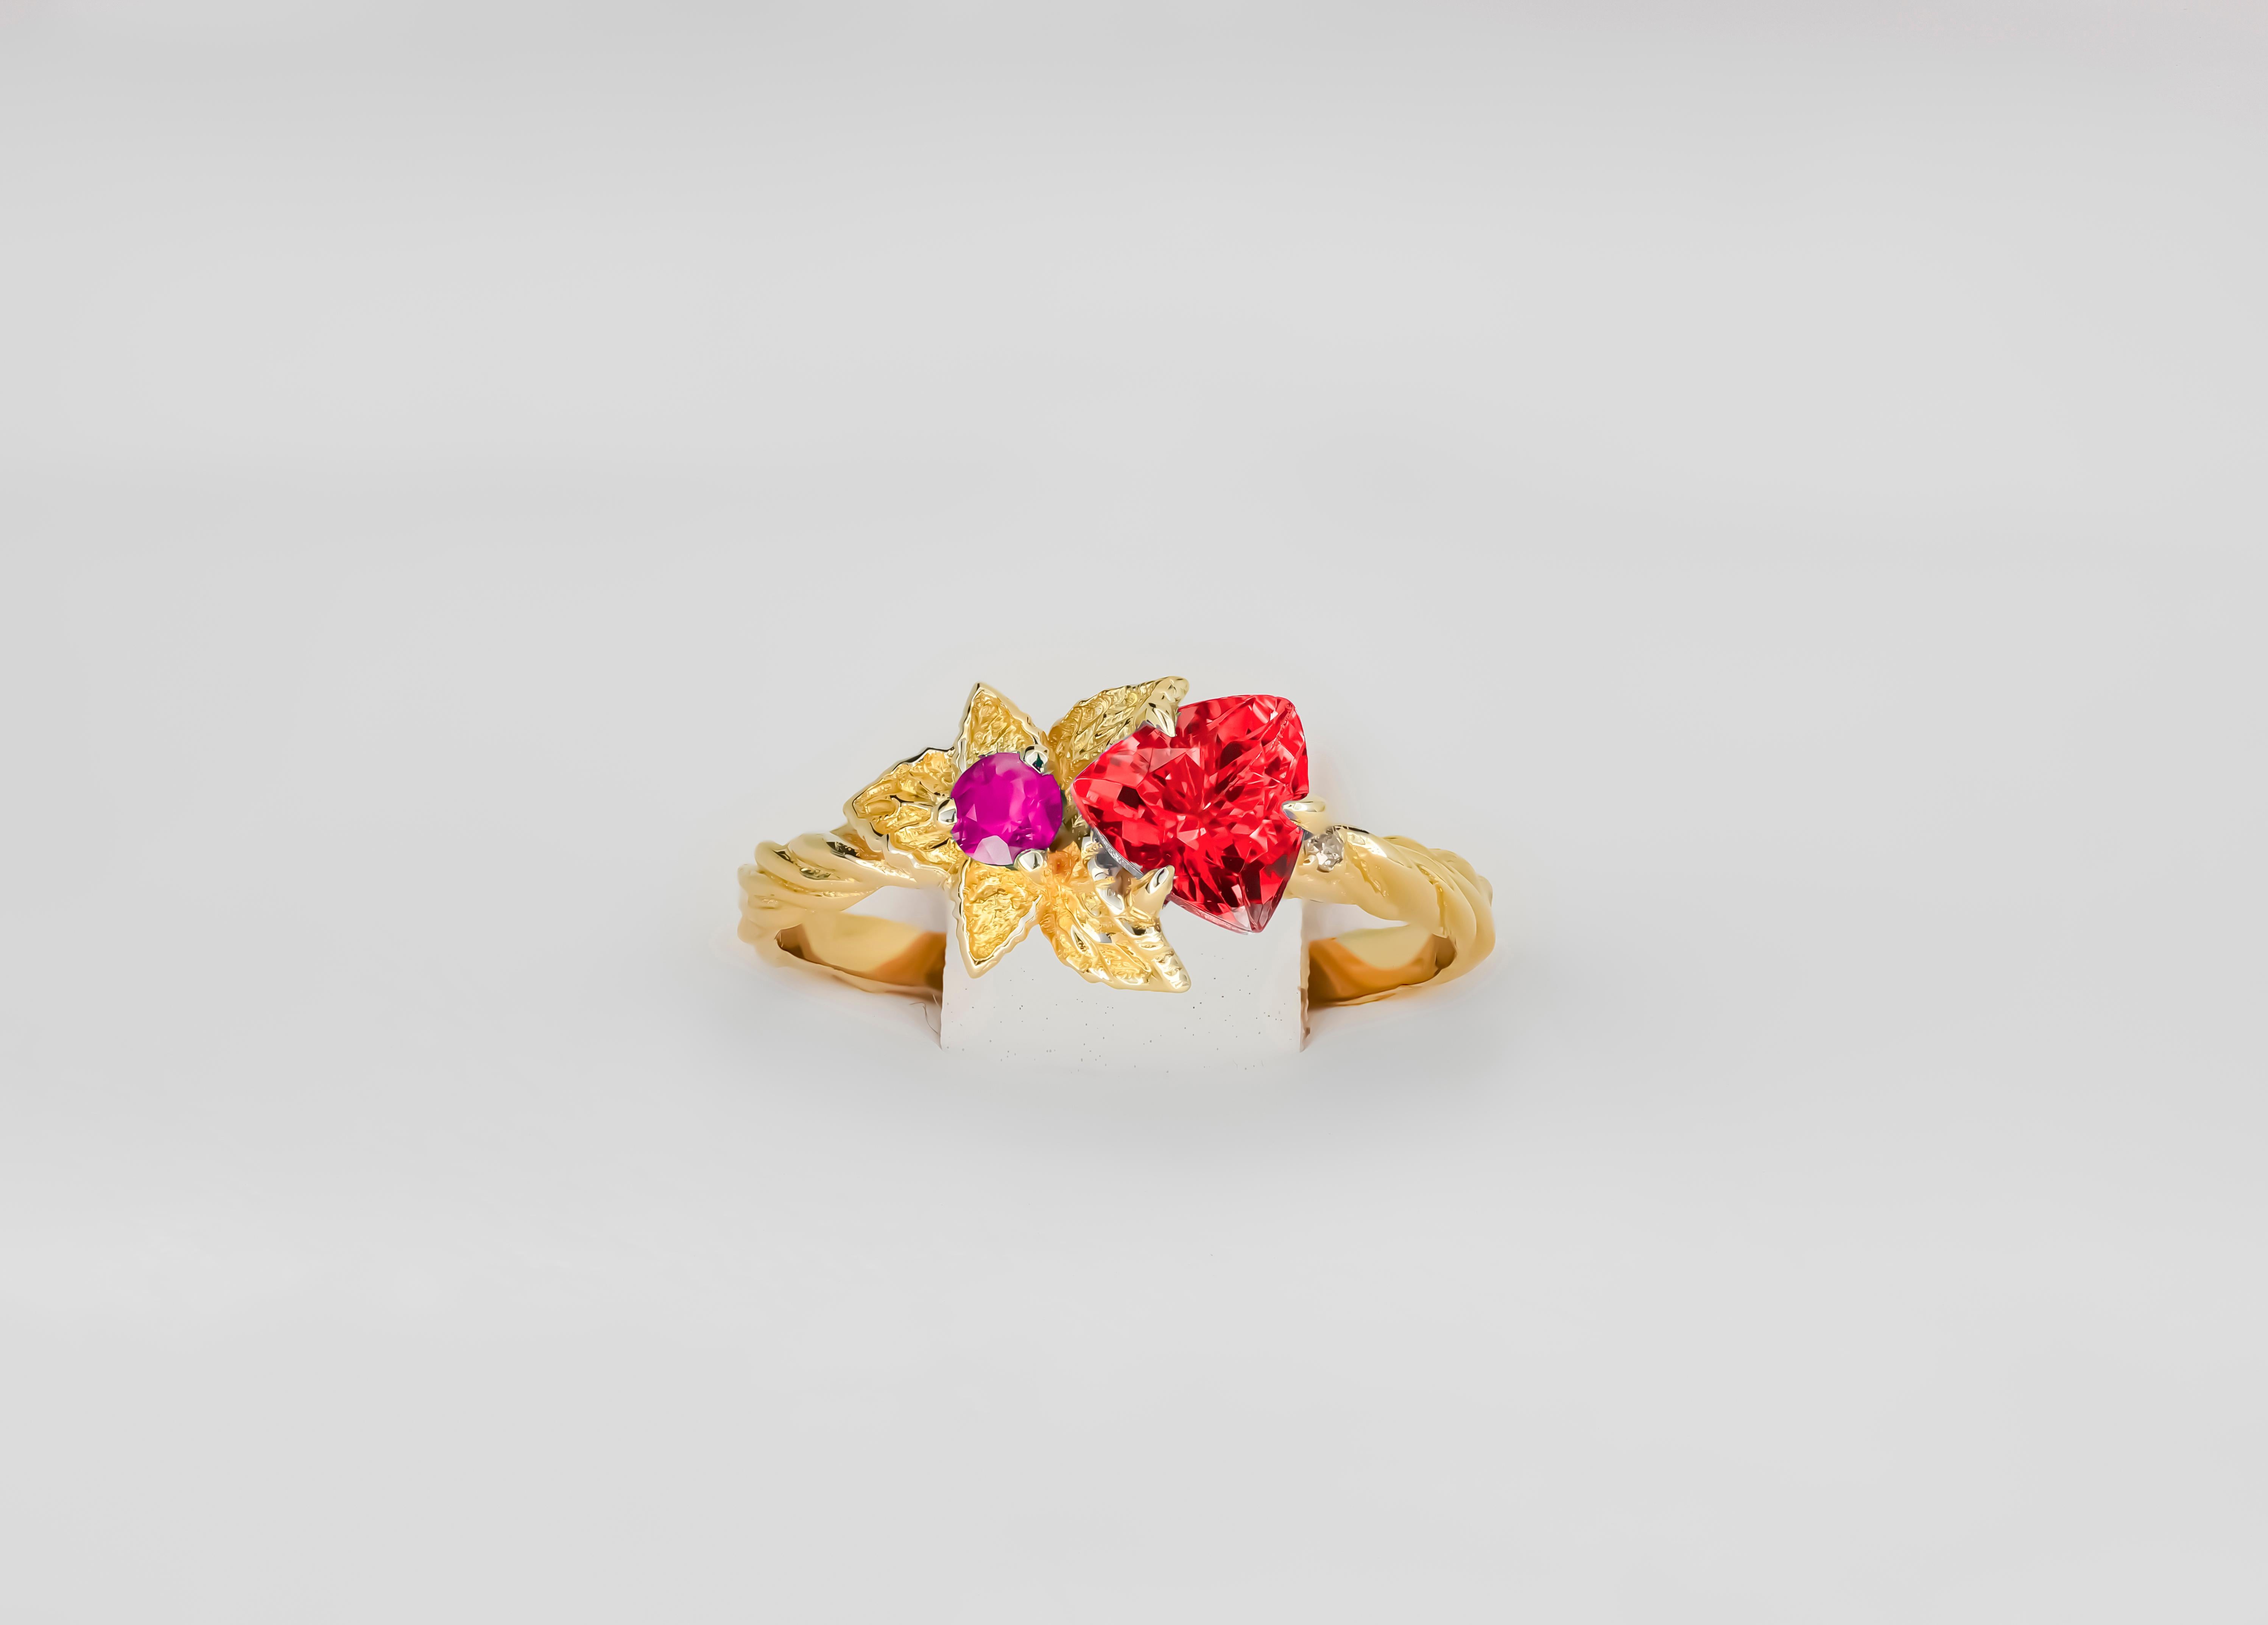 For Sale:  Flower red, purple gemstone 14k gold ring. 2